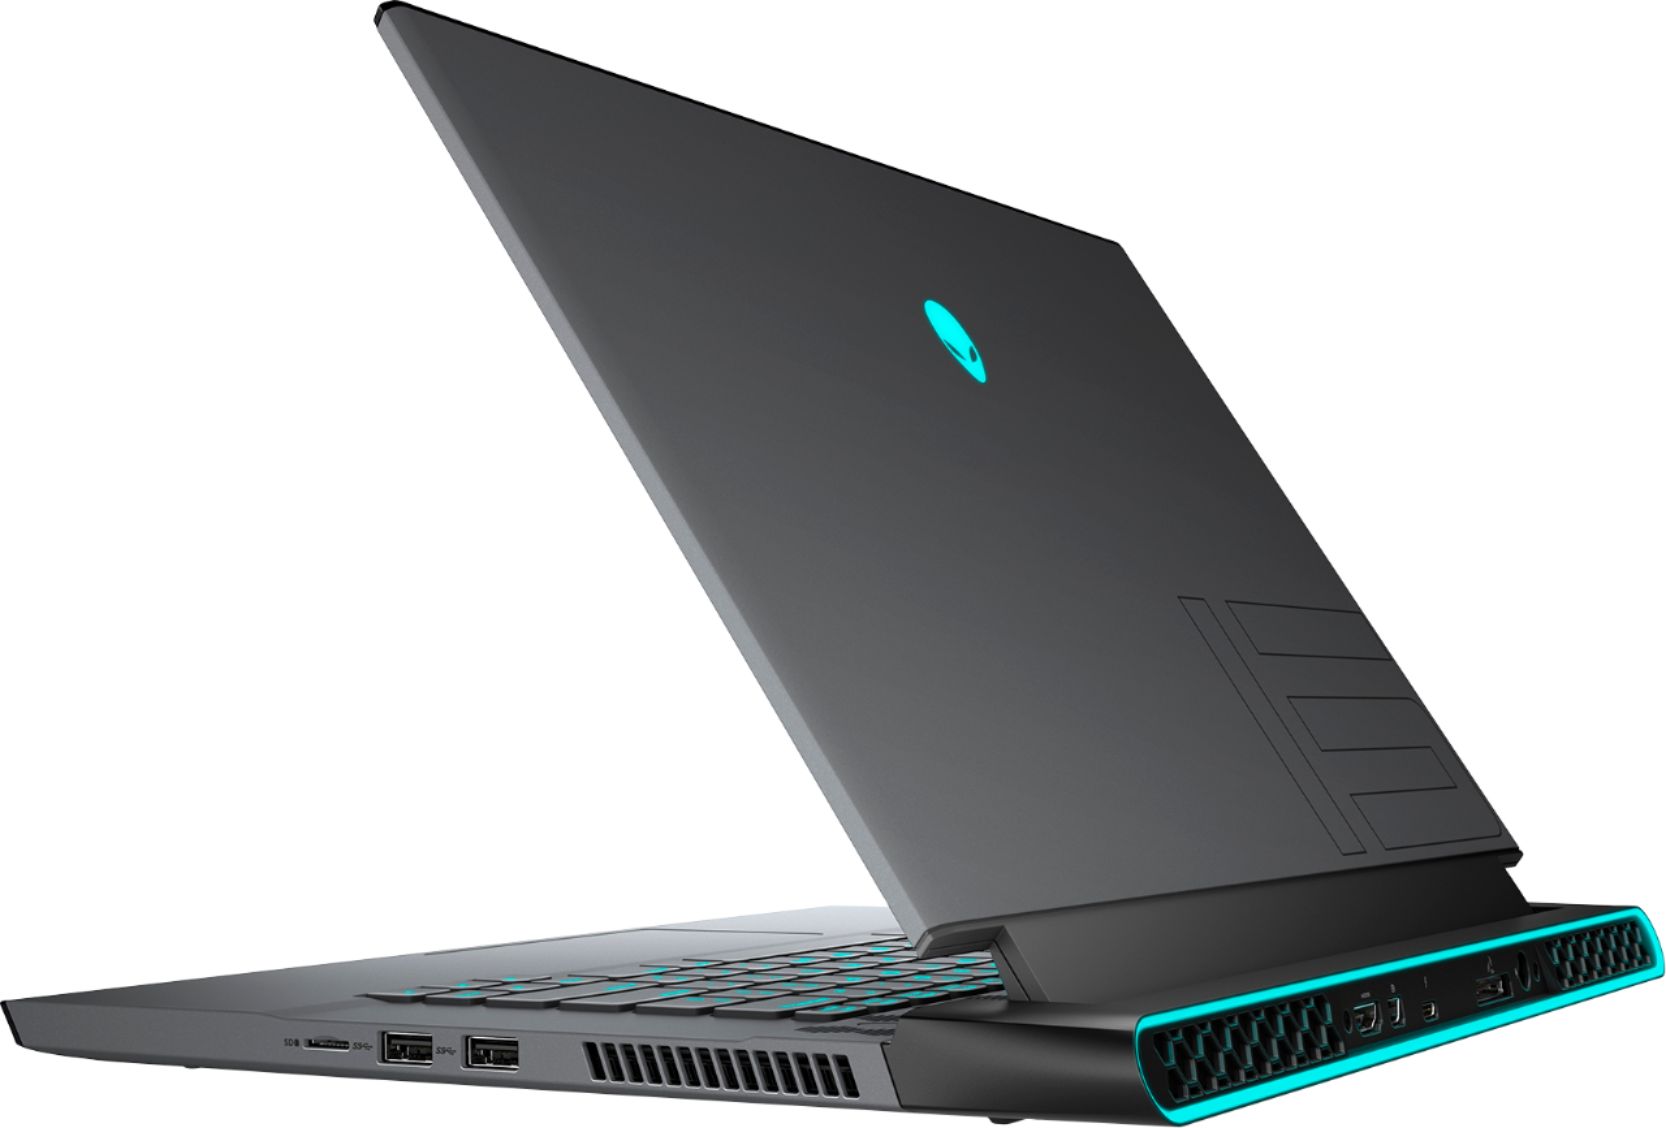 Dell Alienware m15 R3 Gaming and Entertainment Laptop (Intel i7-10750H 6-Core, 16GB RAM, 1TB PCIe SSD, 15.6" Full HD (1920x1080), NVIDIA RTX 2070 Super, Wifi, Bluetooth, Webcam, 3xUSB 3.1, Win 10 Pro) - image 5 of 6